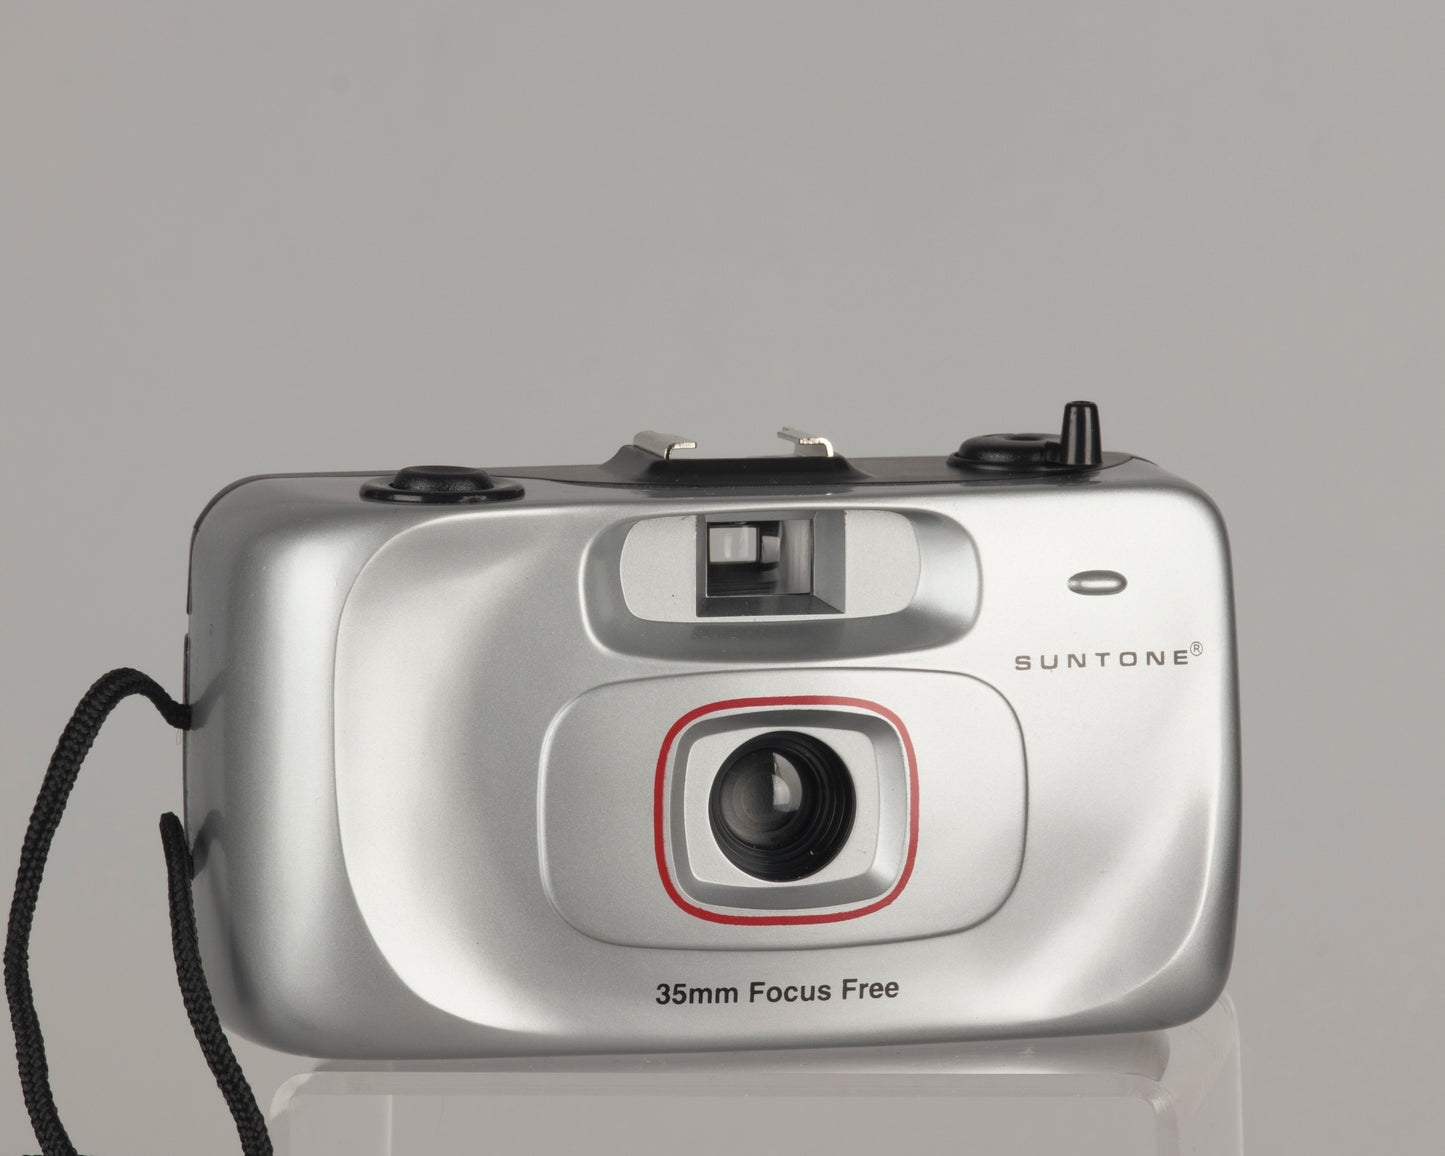 Suntone MM252 Focus Free 35mm film camera; includes original box and manual